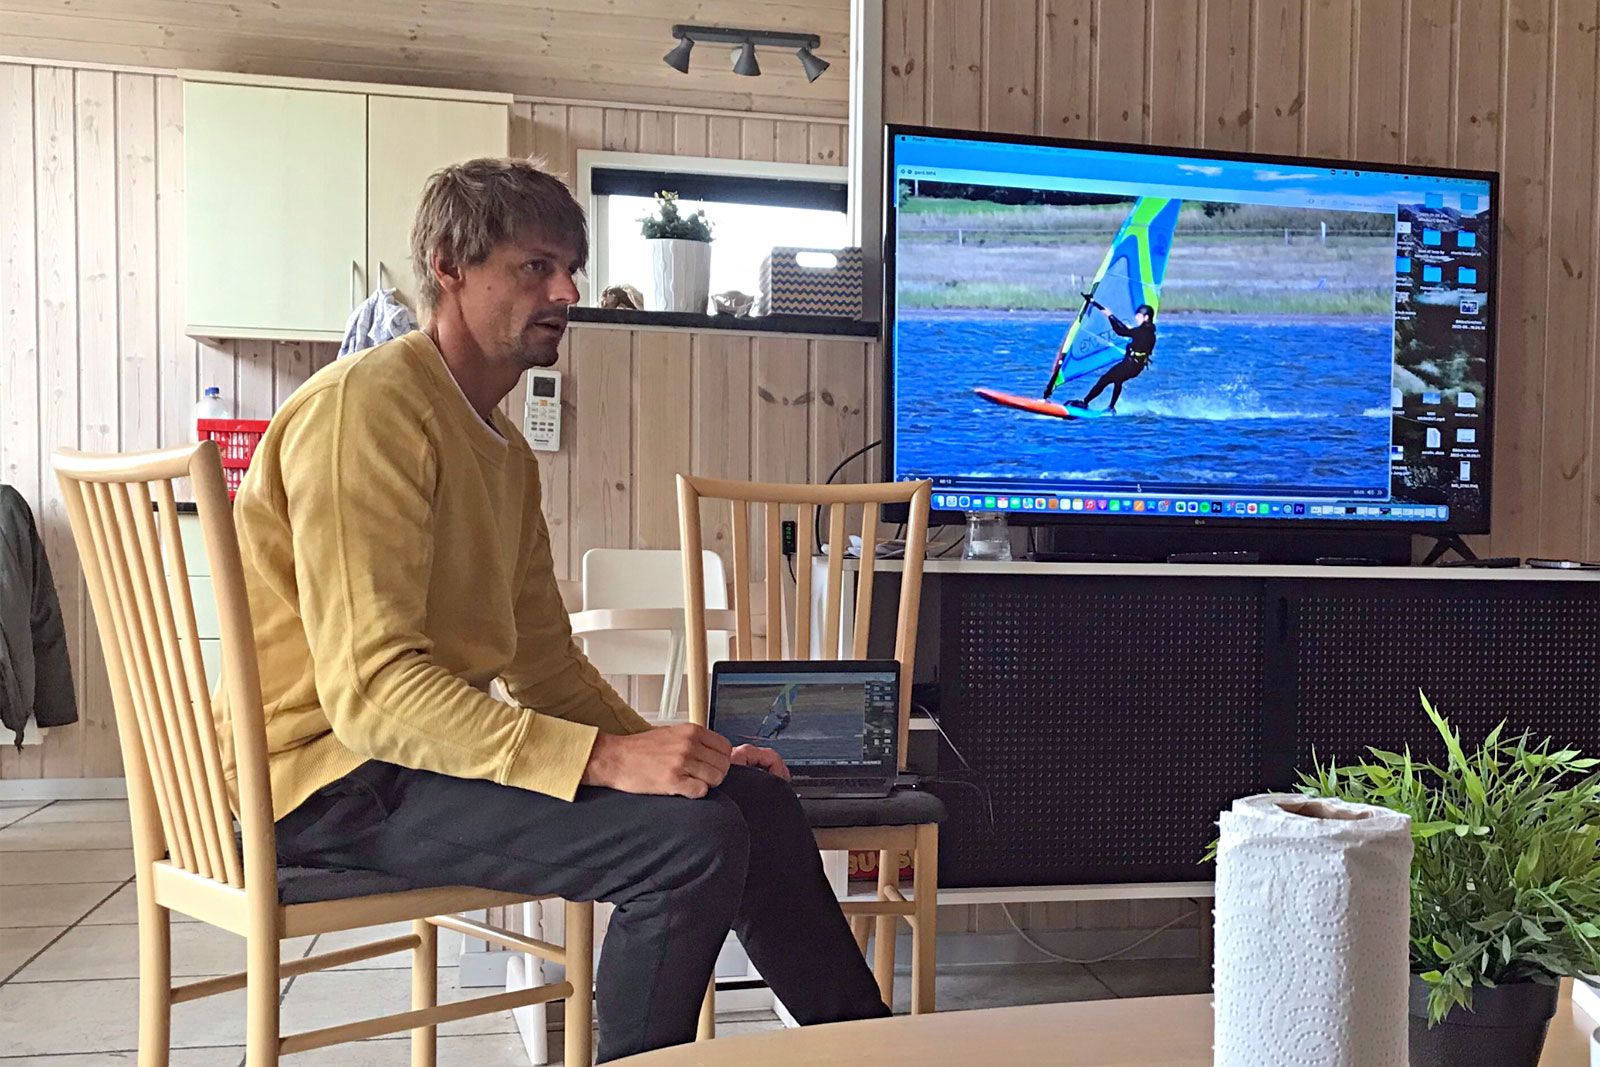 Flo Jung Wave Camp Dänemark: Philipp Grzybowski berichtet Schulung per Videoanalyse